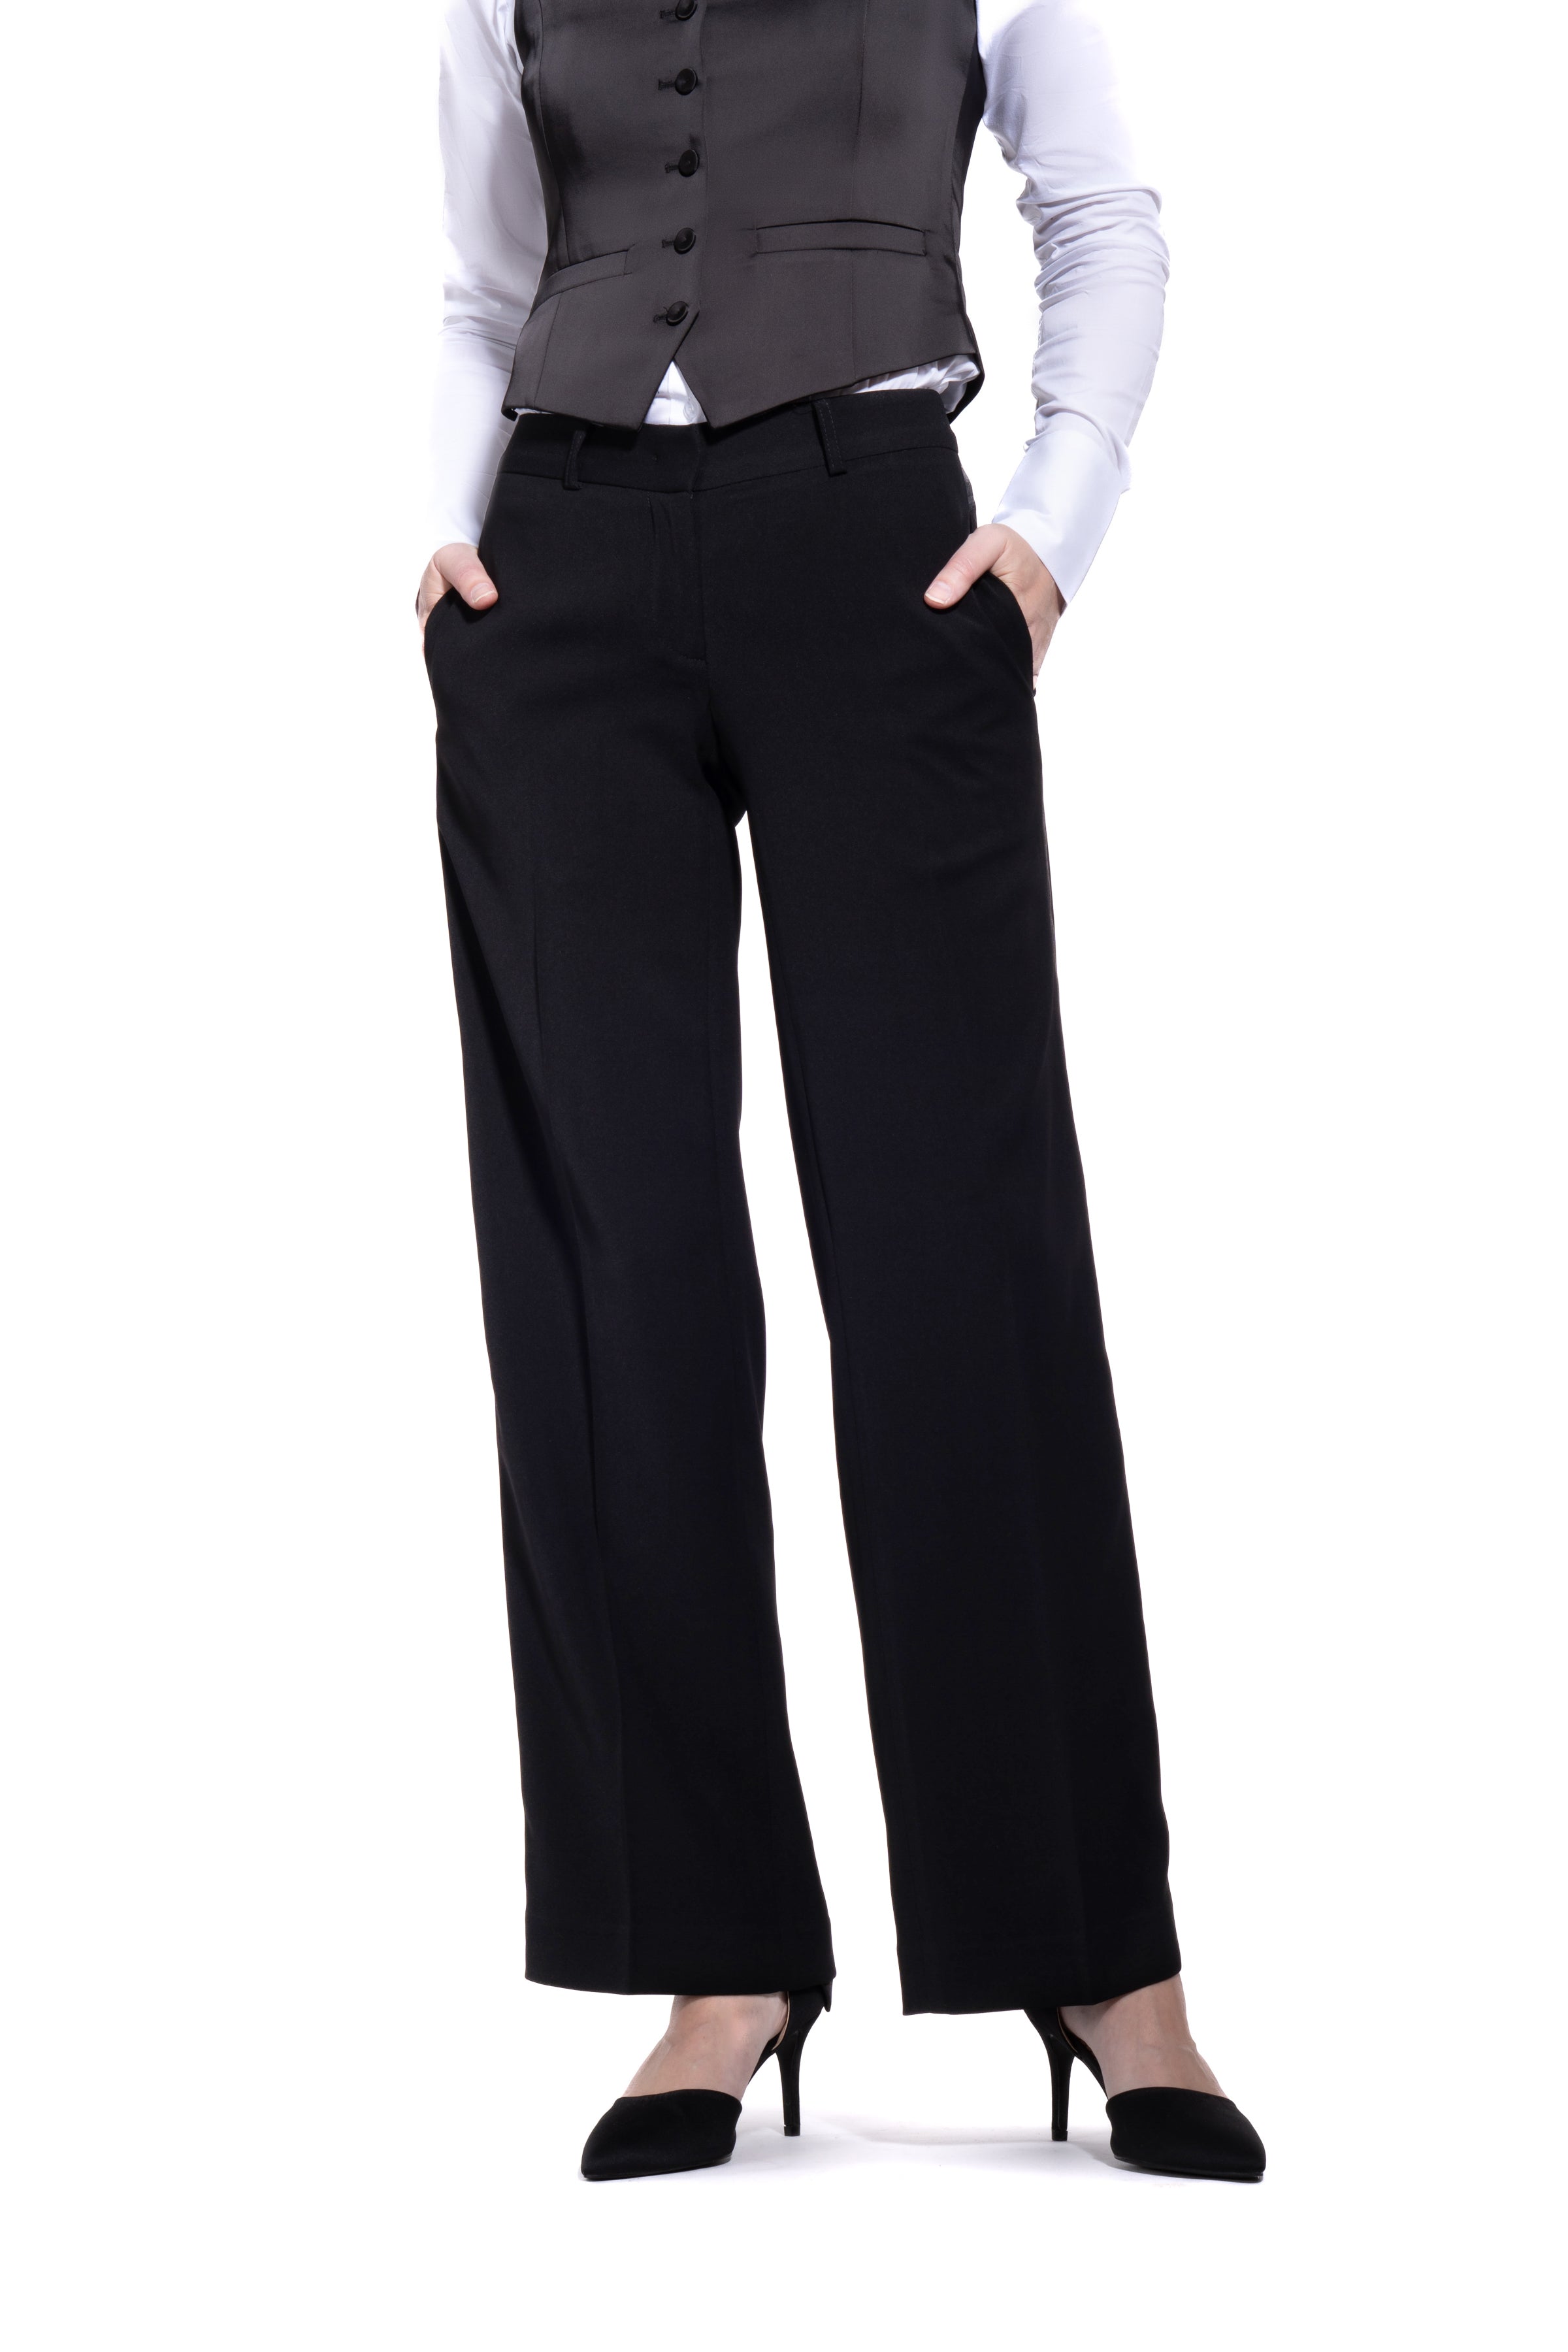 Hugo Boss Tulia 4 Wool Dress Pants Trousers 2 Black Straight Leg Career  Womens | eBay